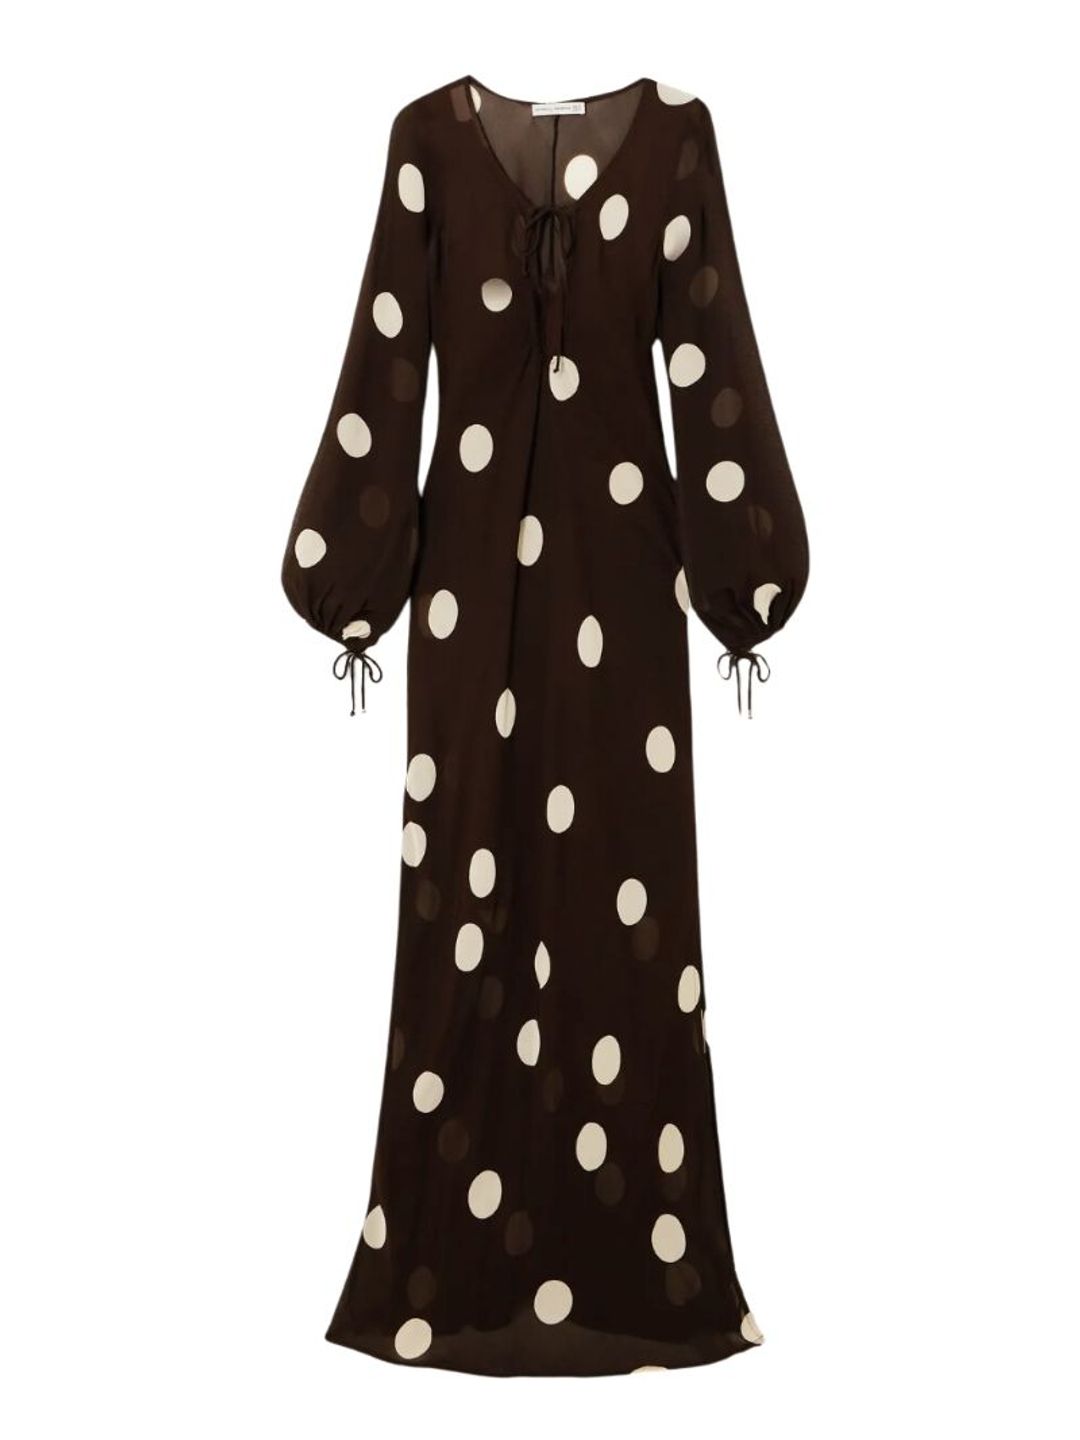 Brown and white polka dot maxi dress